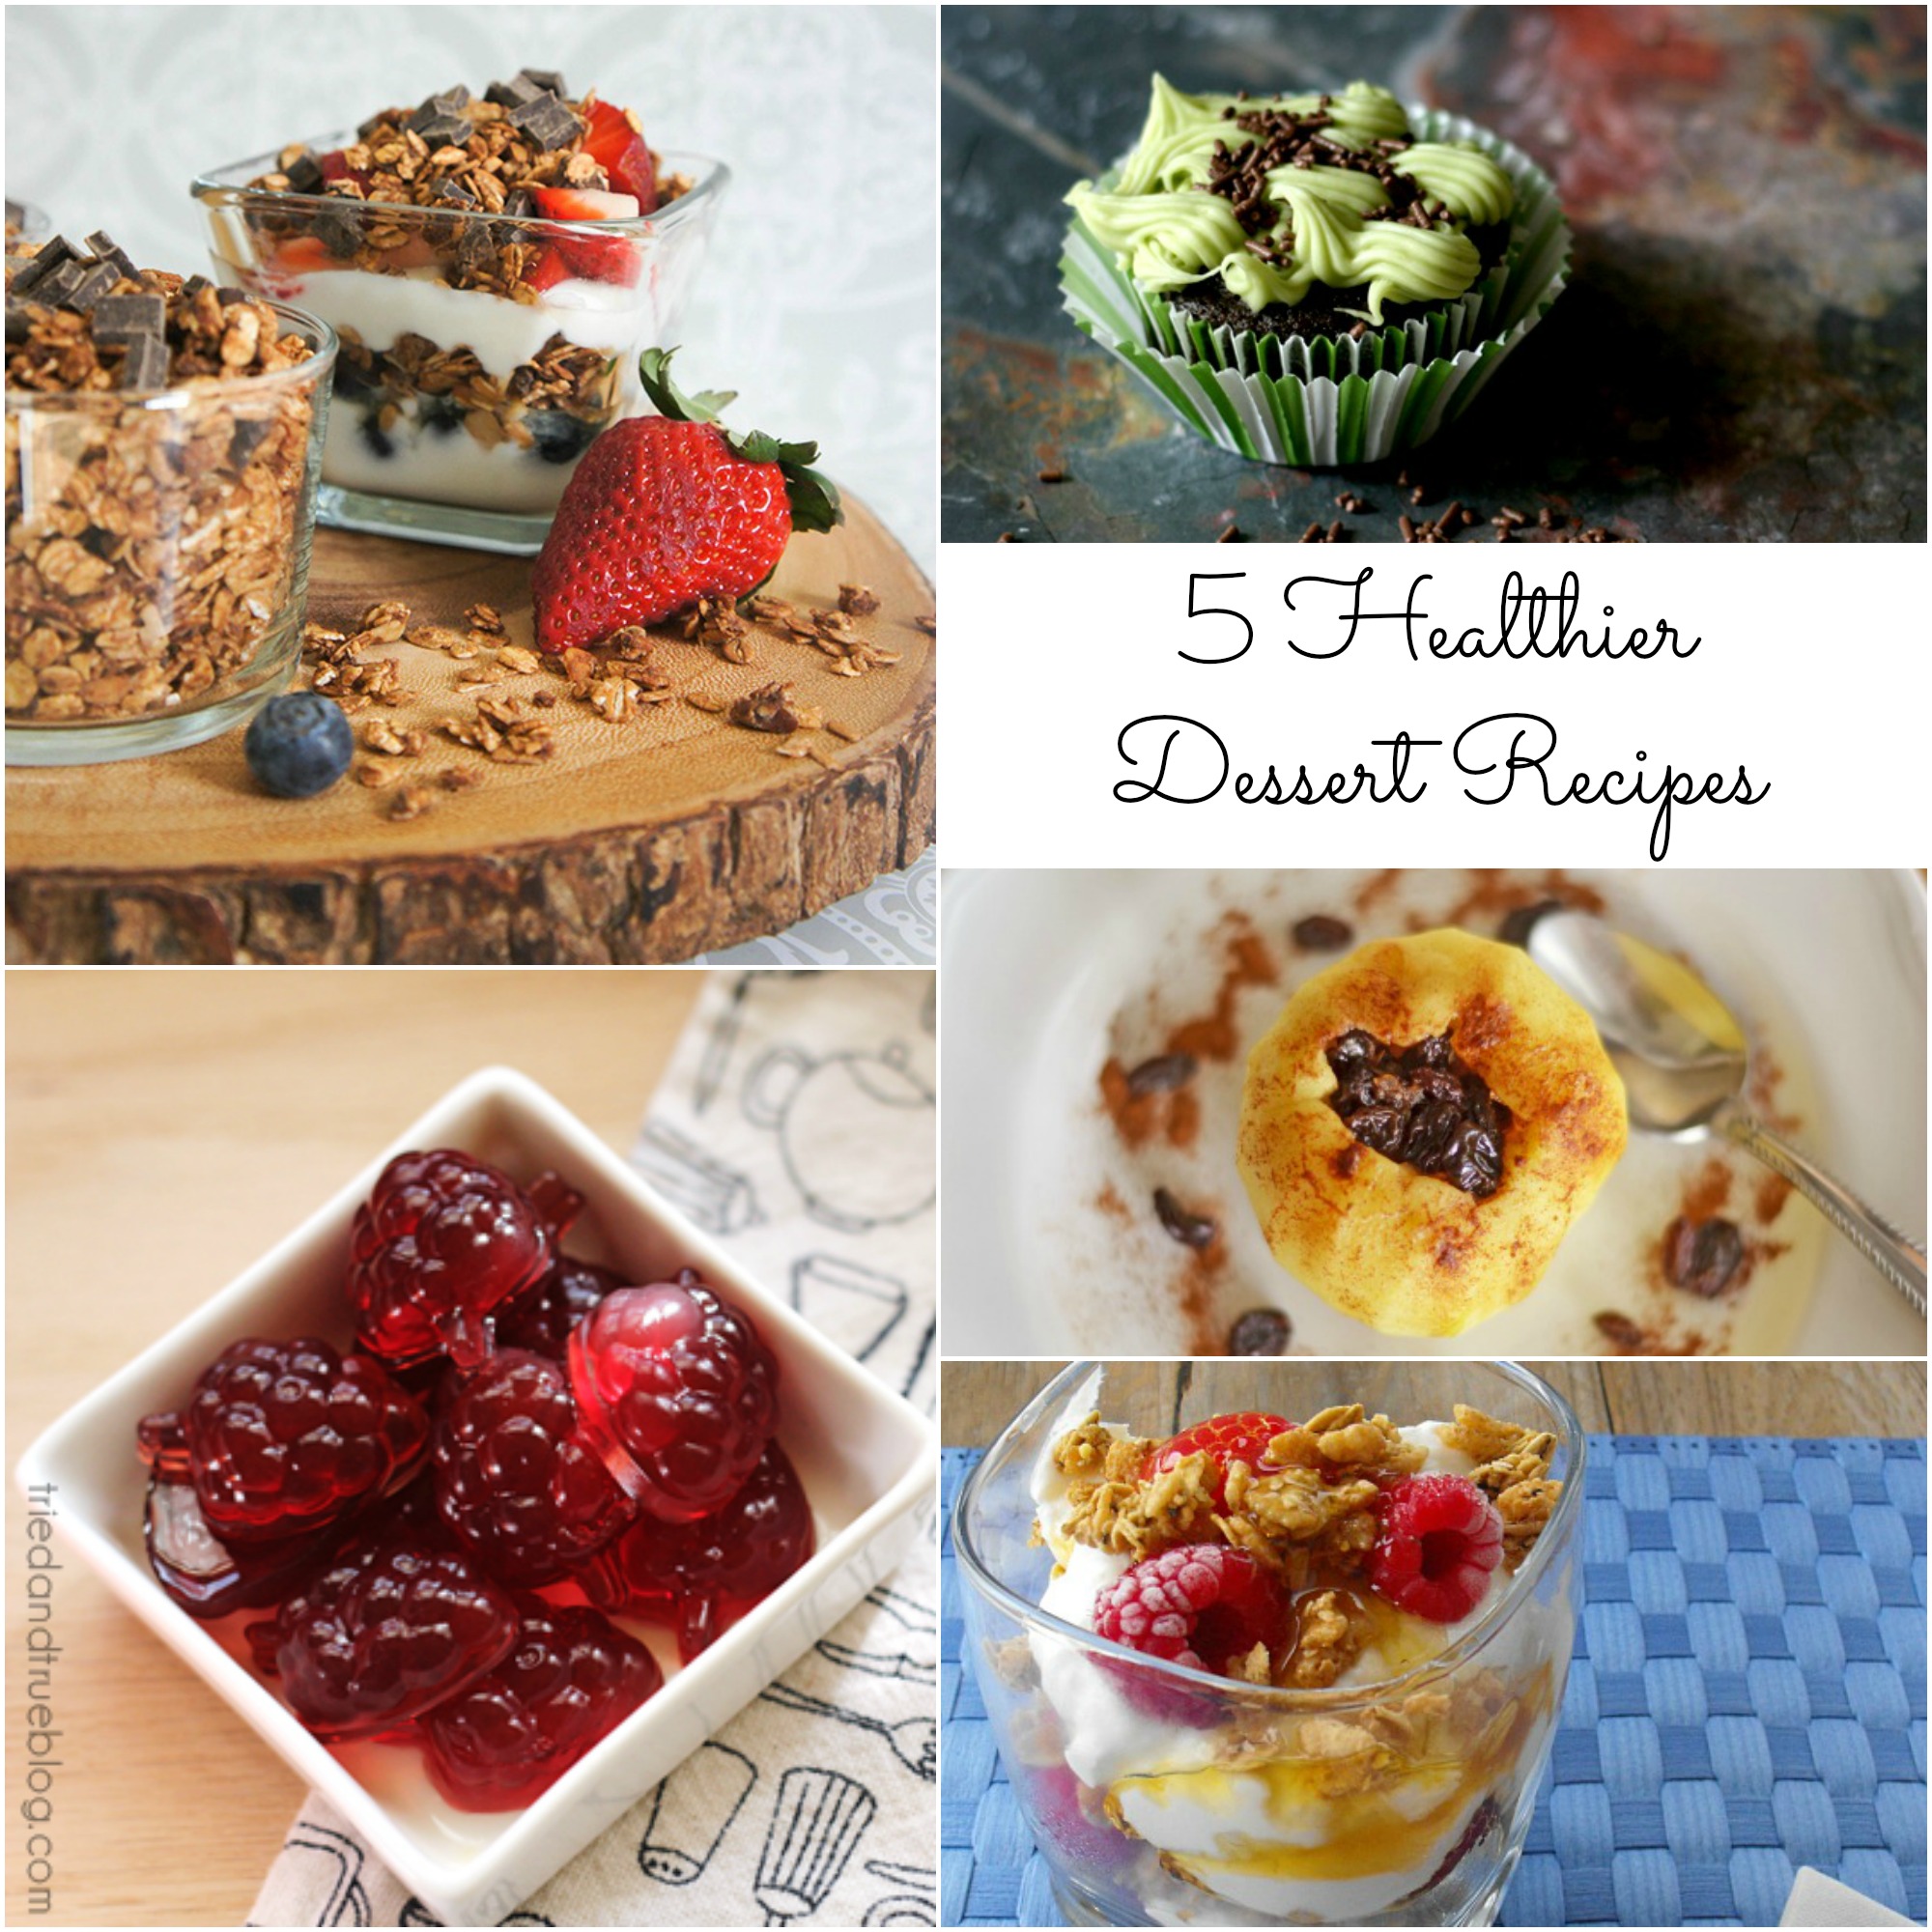 healthier desserts, dessert recipes, fruit snacks, cupcakes, granola